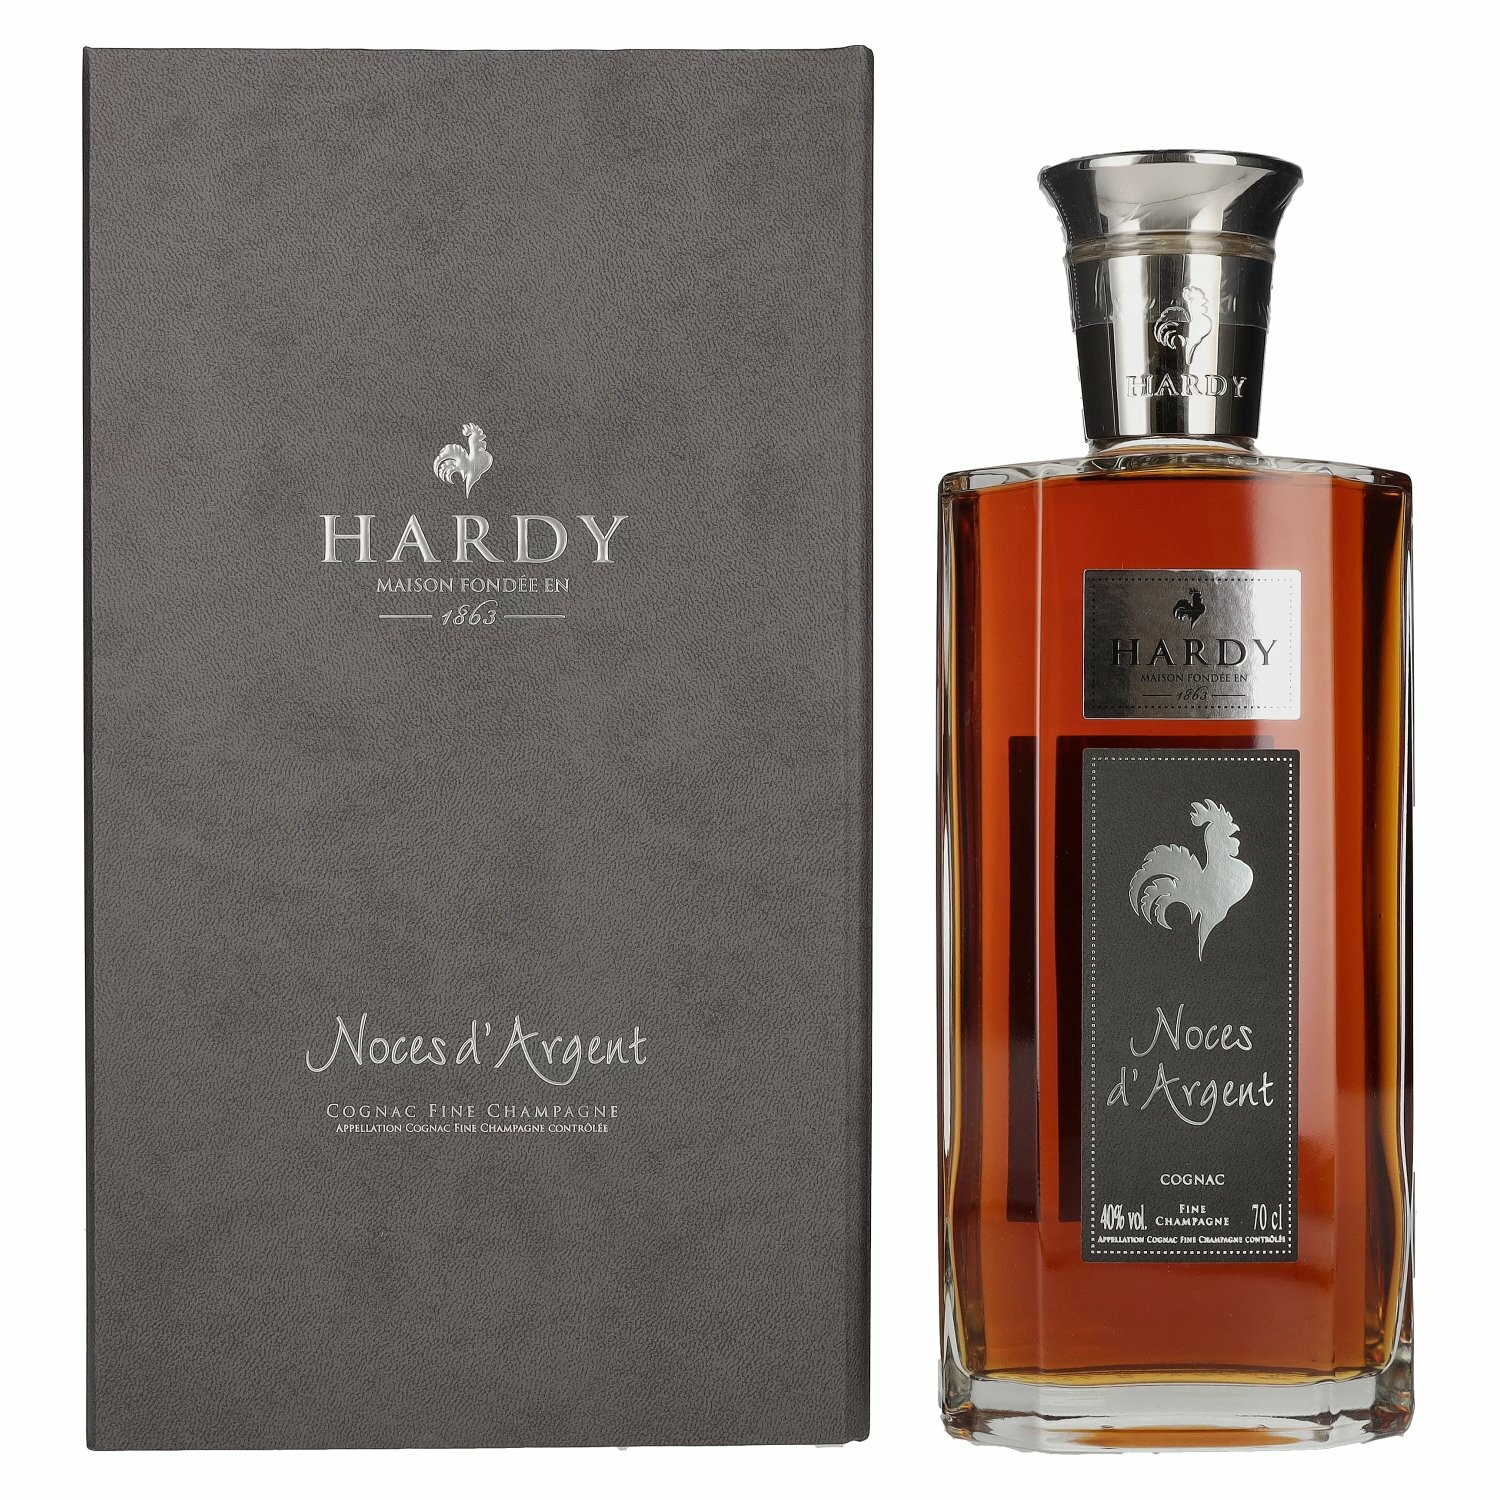 Hardy Cognac Noces d'Argent 40% Vol. 0,7l in Giftbox